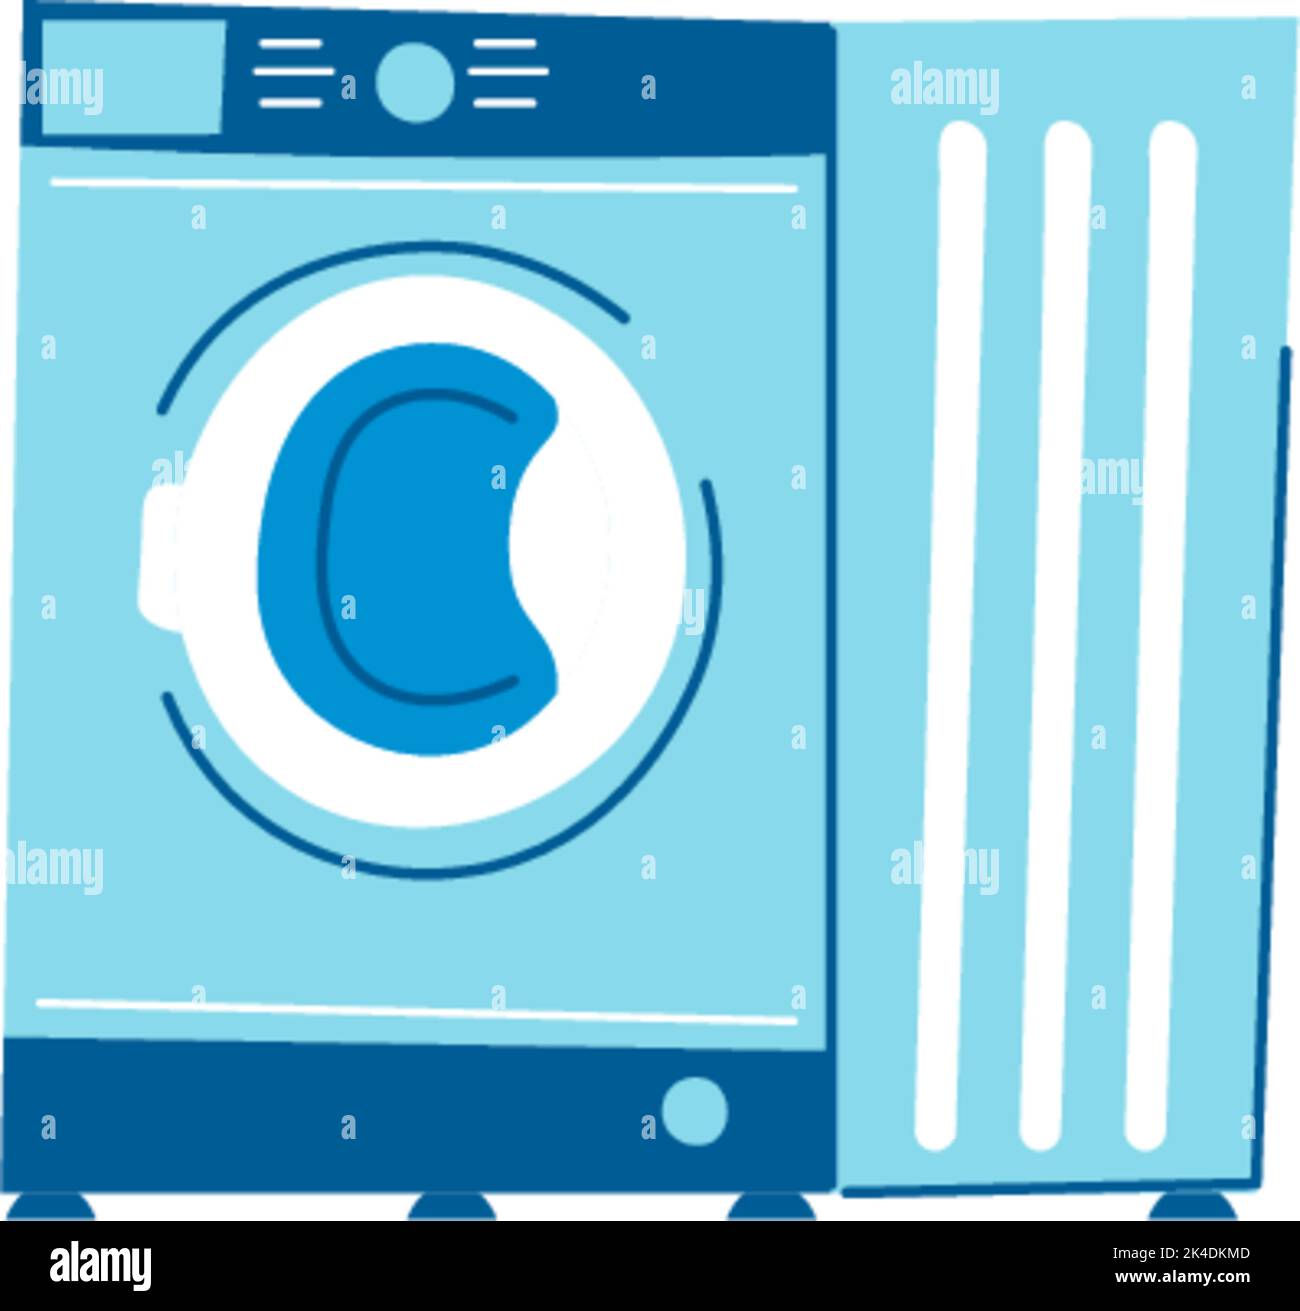 Washing machine, bathroom electric appliances Stock Vector